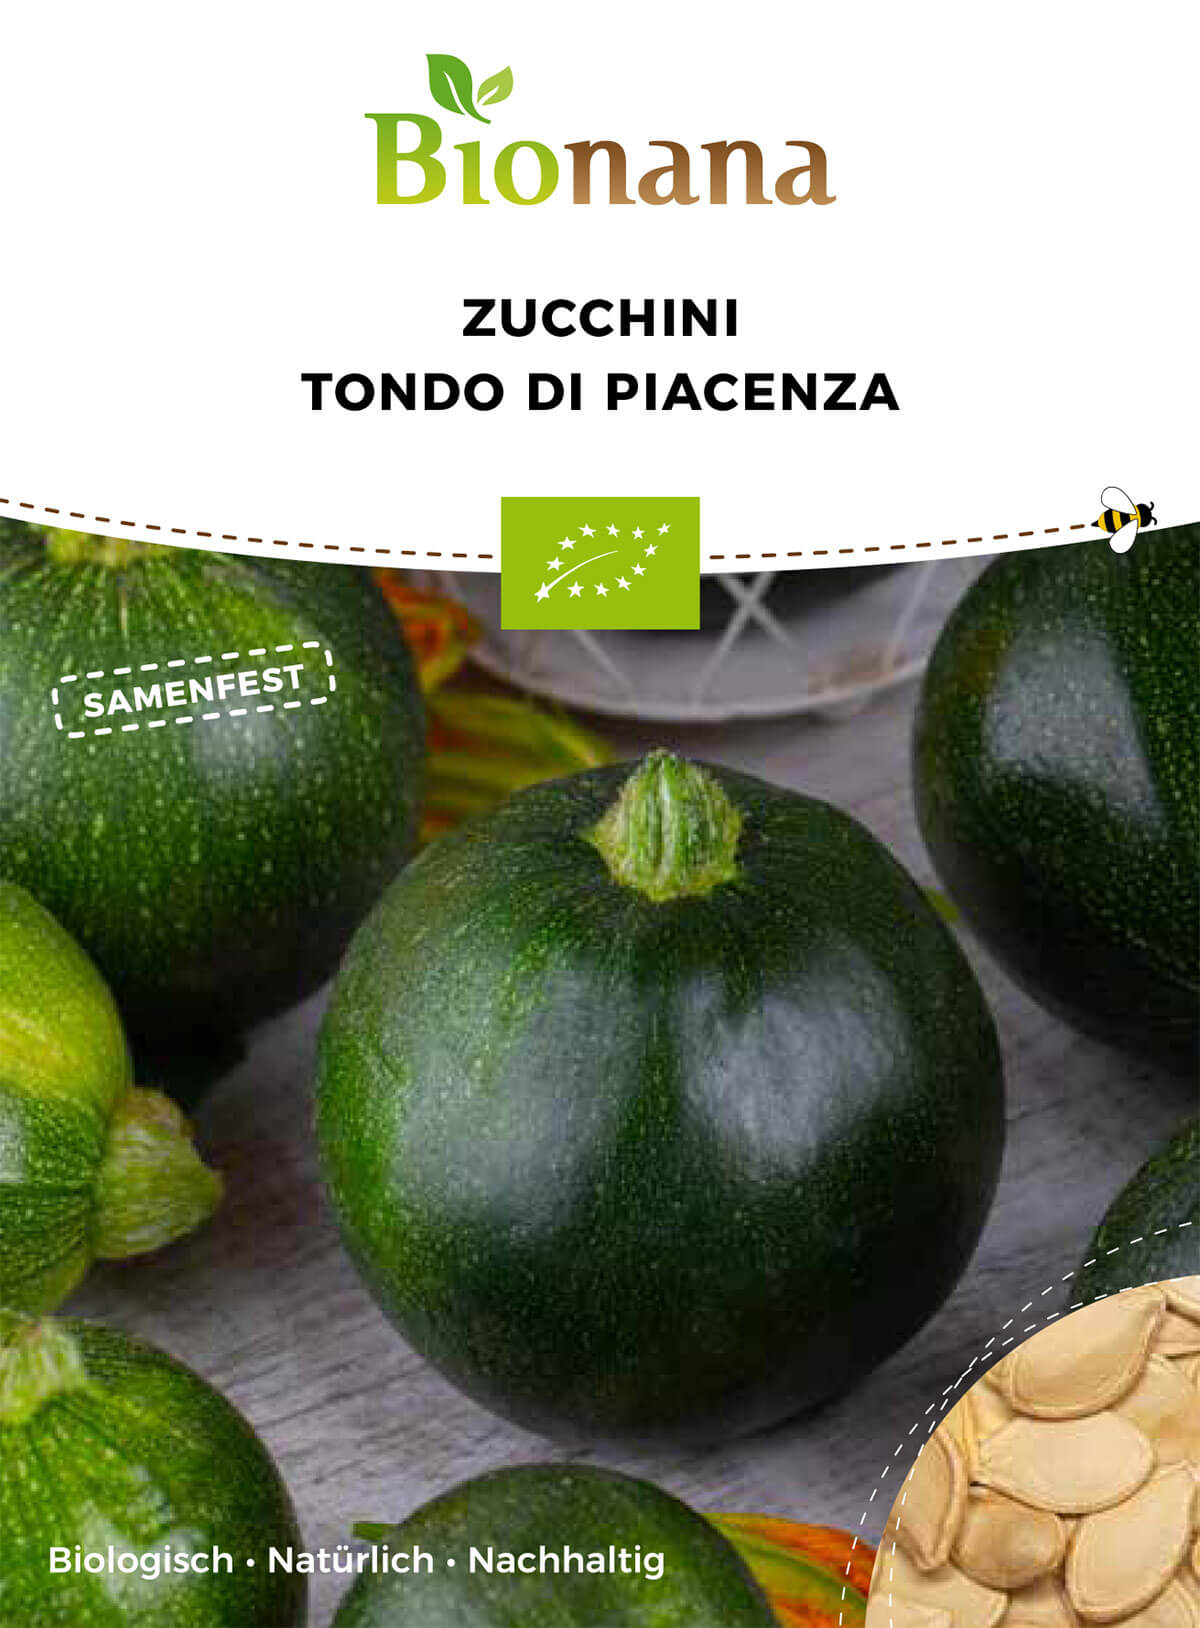 Zucchini Tondo di Piacenza | BIO Zucchinisamen von Bionana